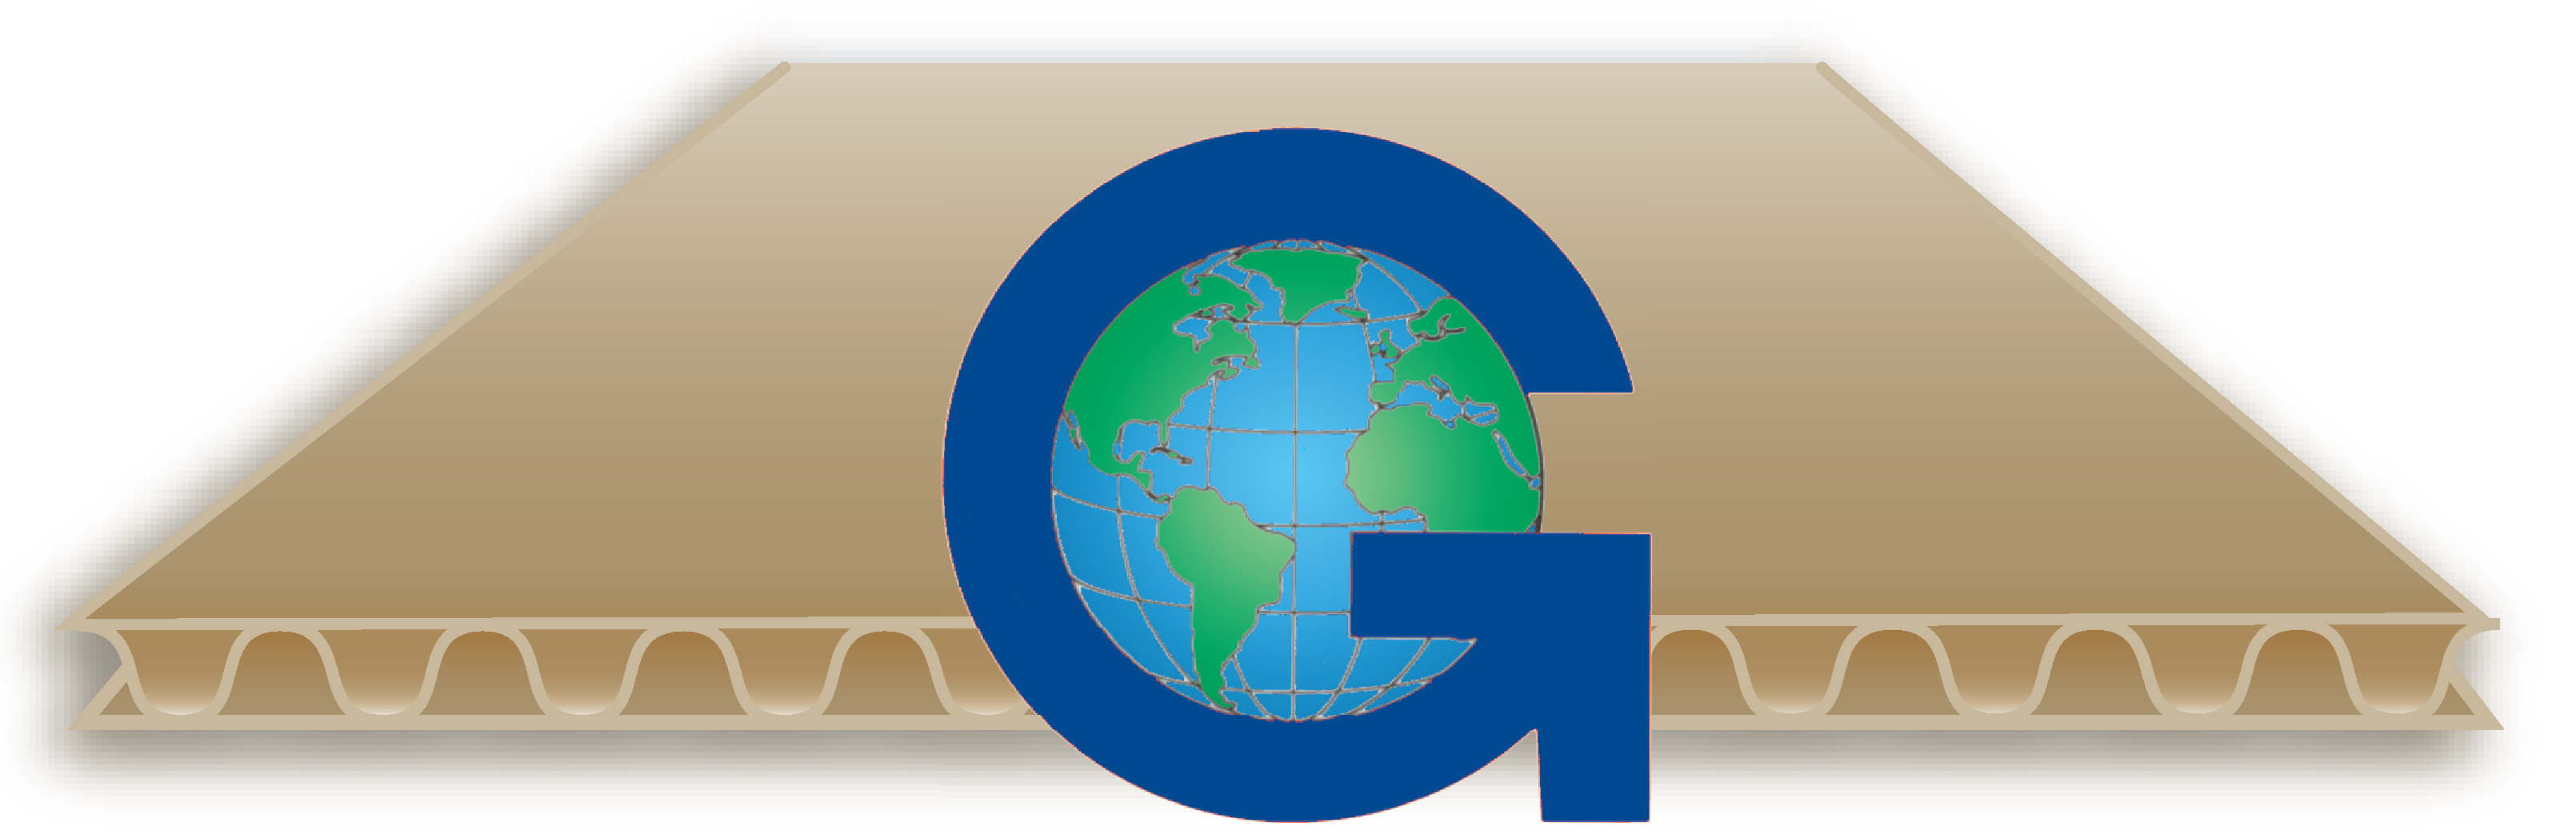 Goettsch International for Corrugating Parts